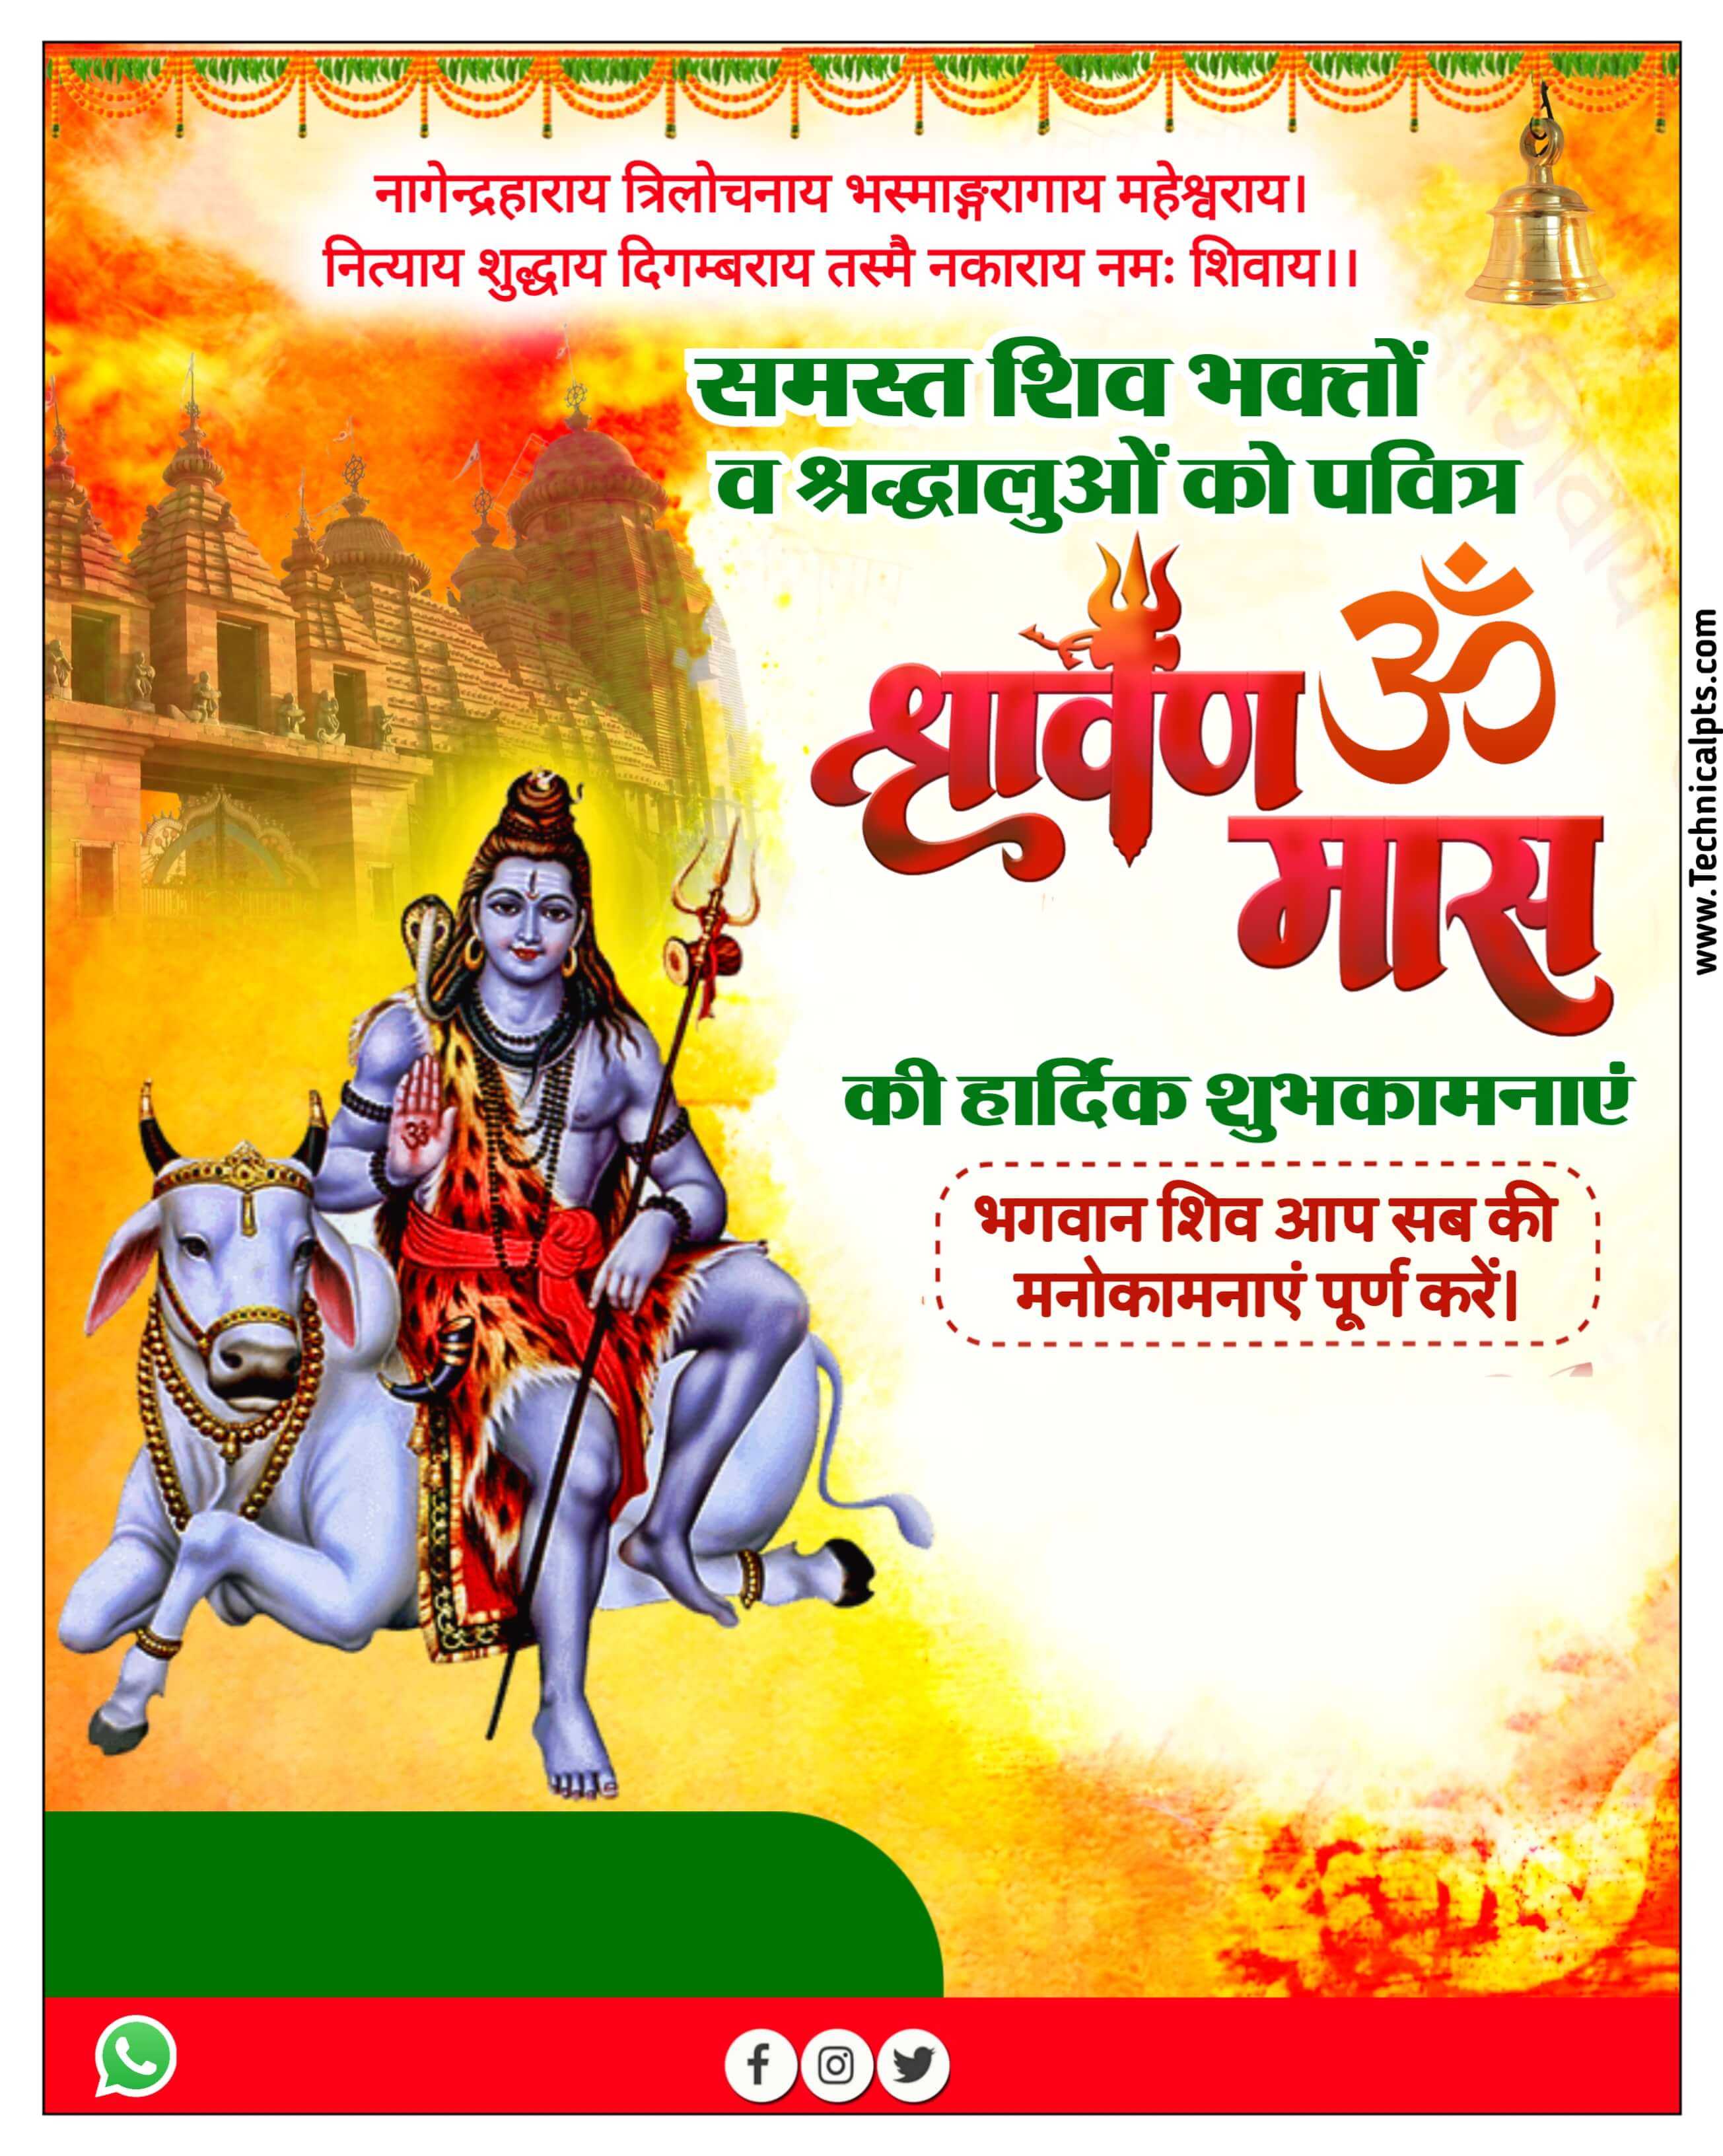 shravan mass poster plp file download | shravan mass poster kaise banaye mobile se free